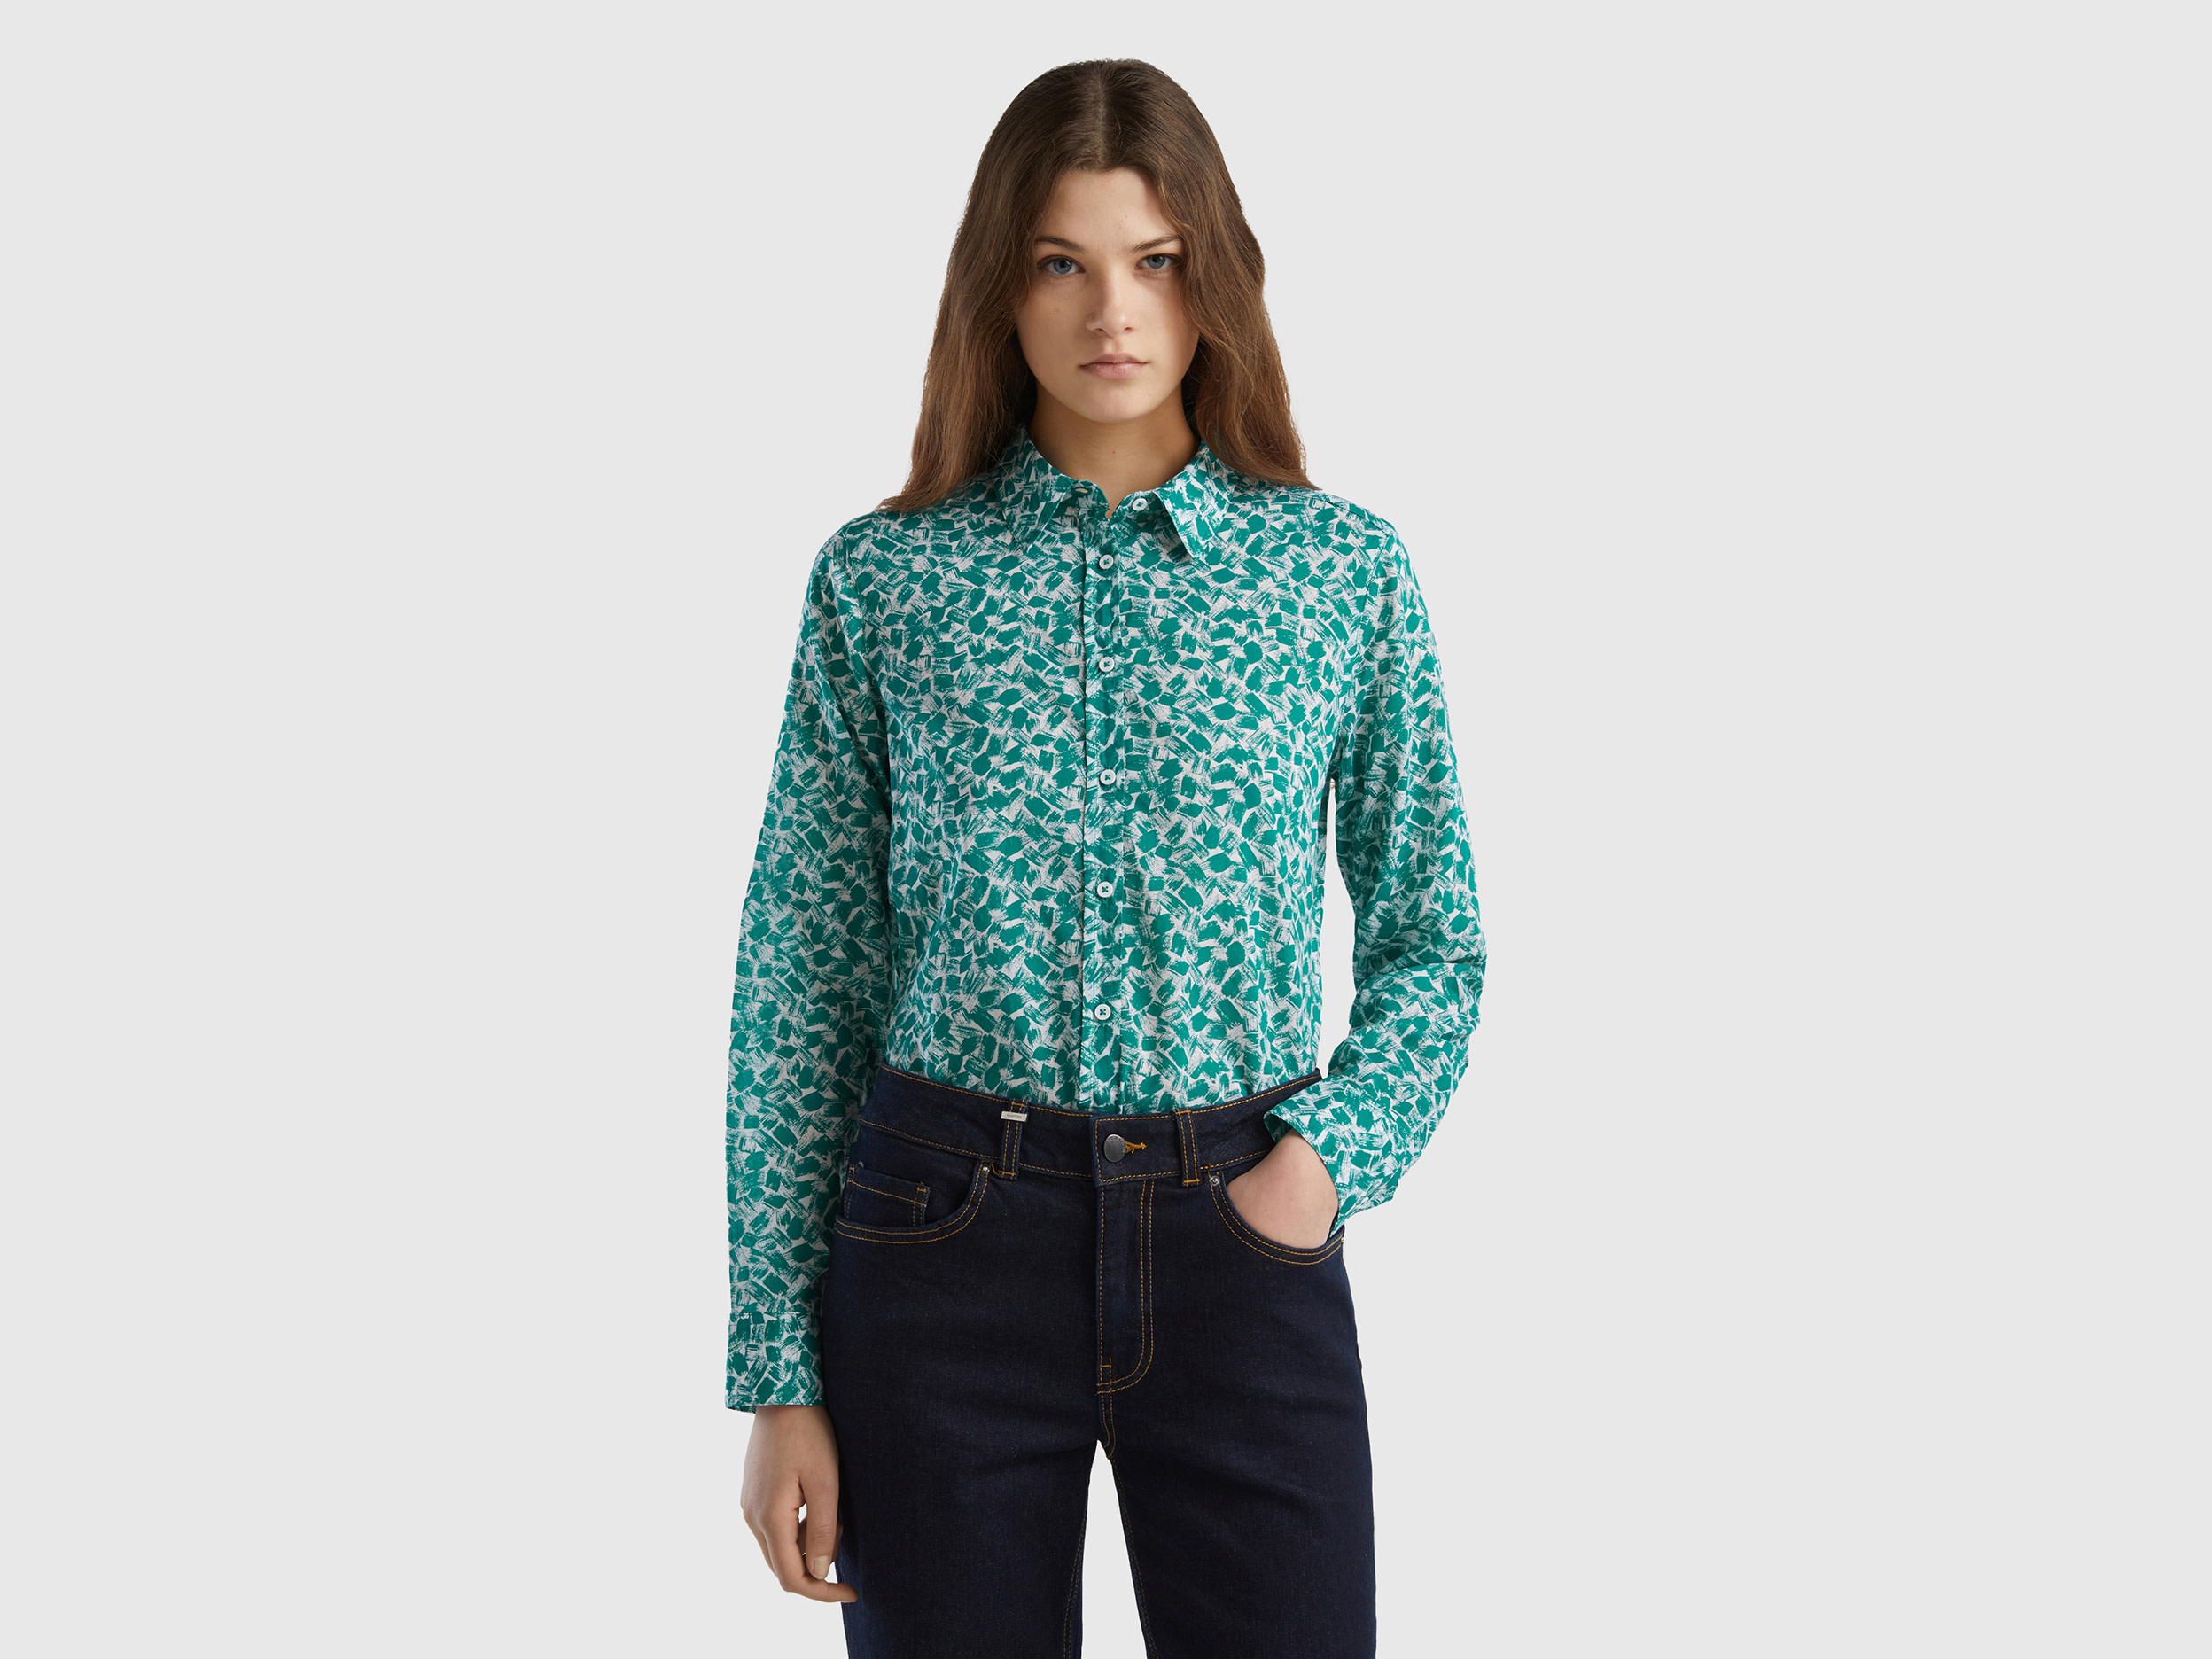 Benetton, 100% Cotton Patterned Shirt, size XXS, Teal, Women